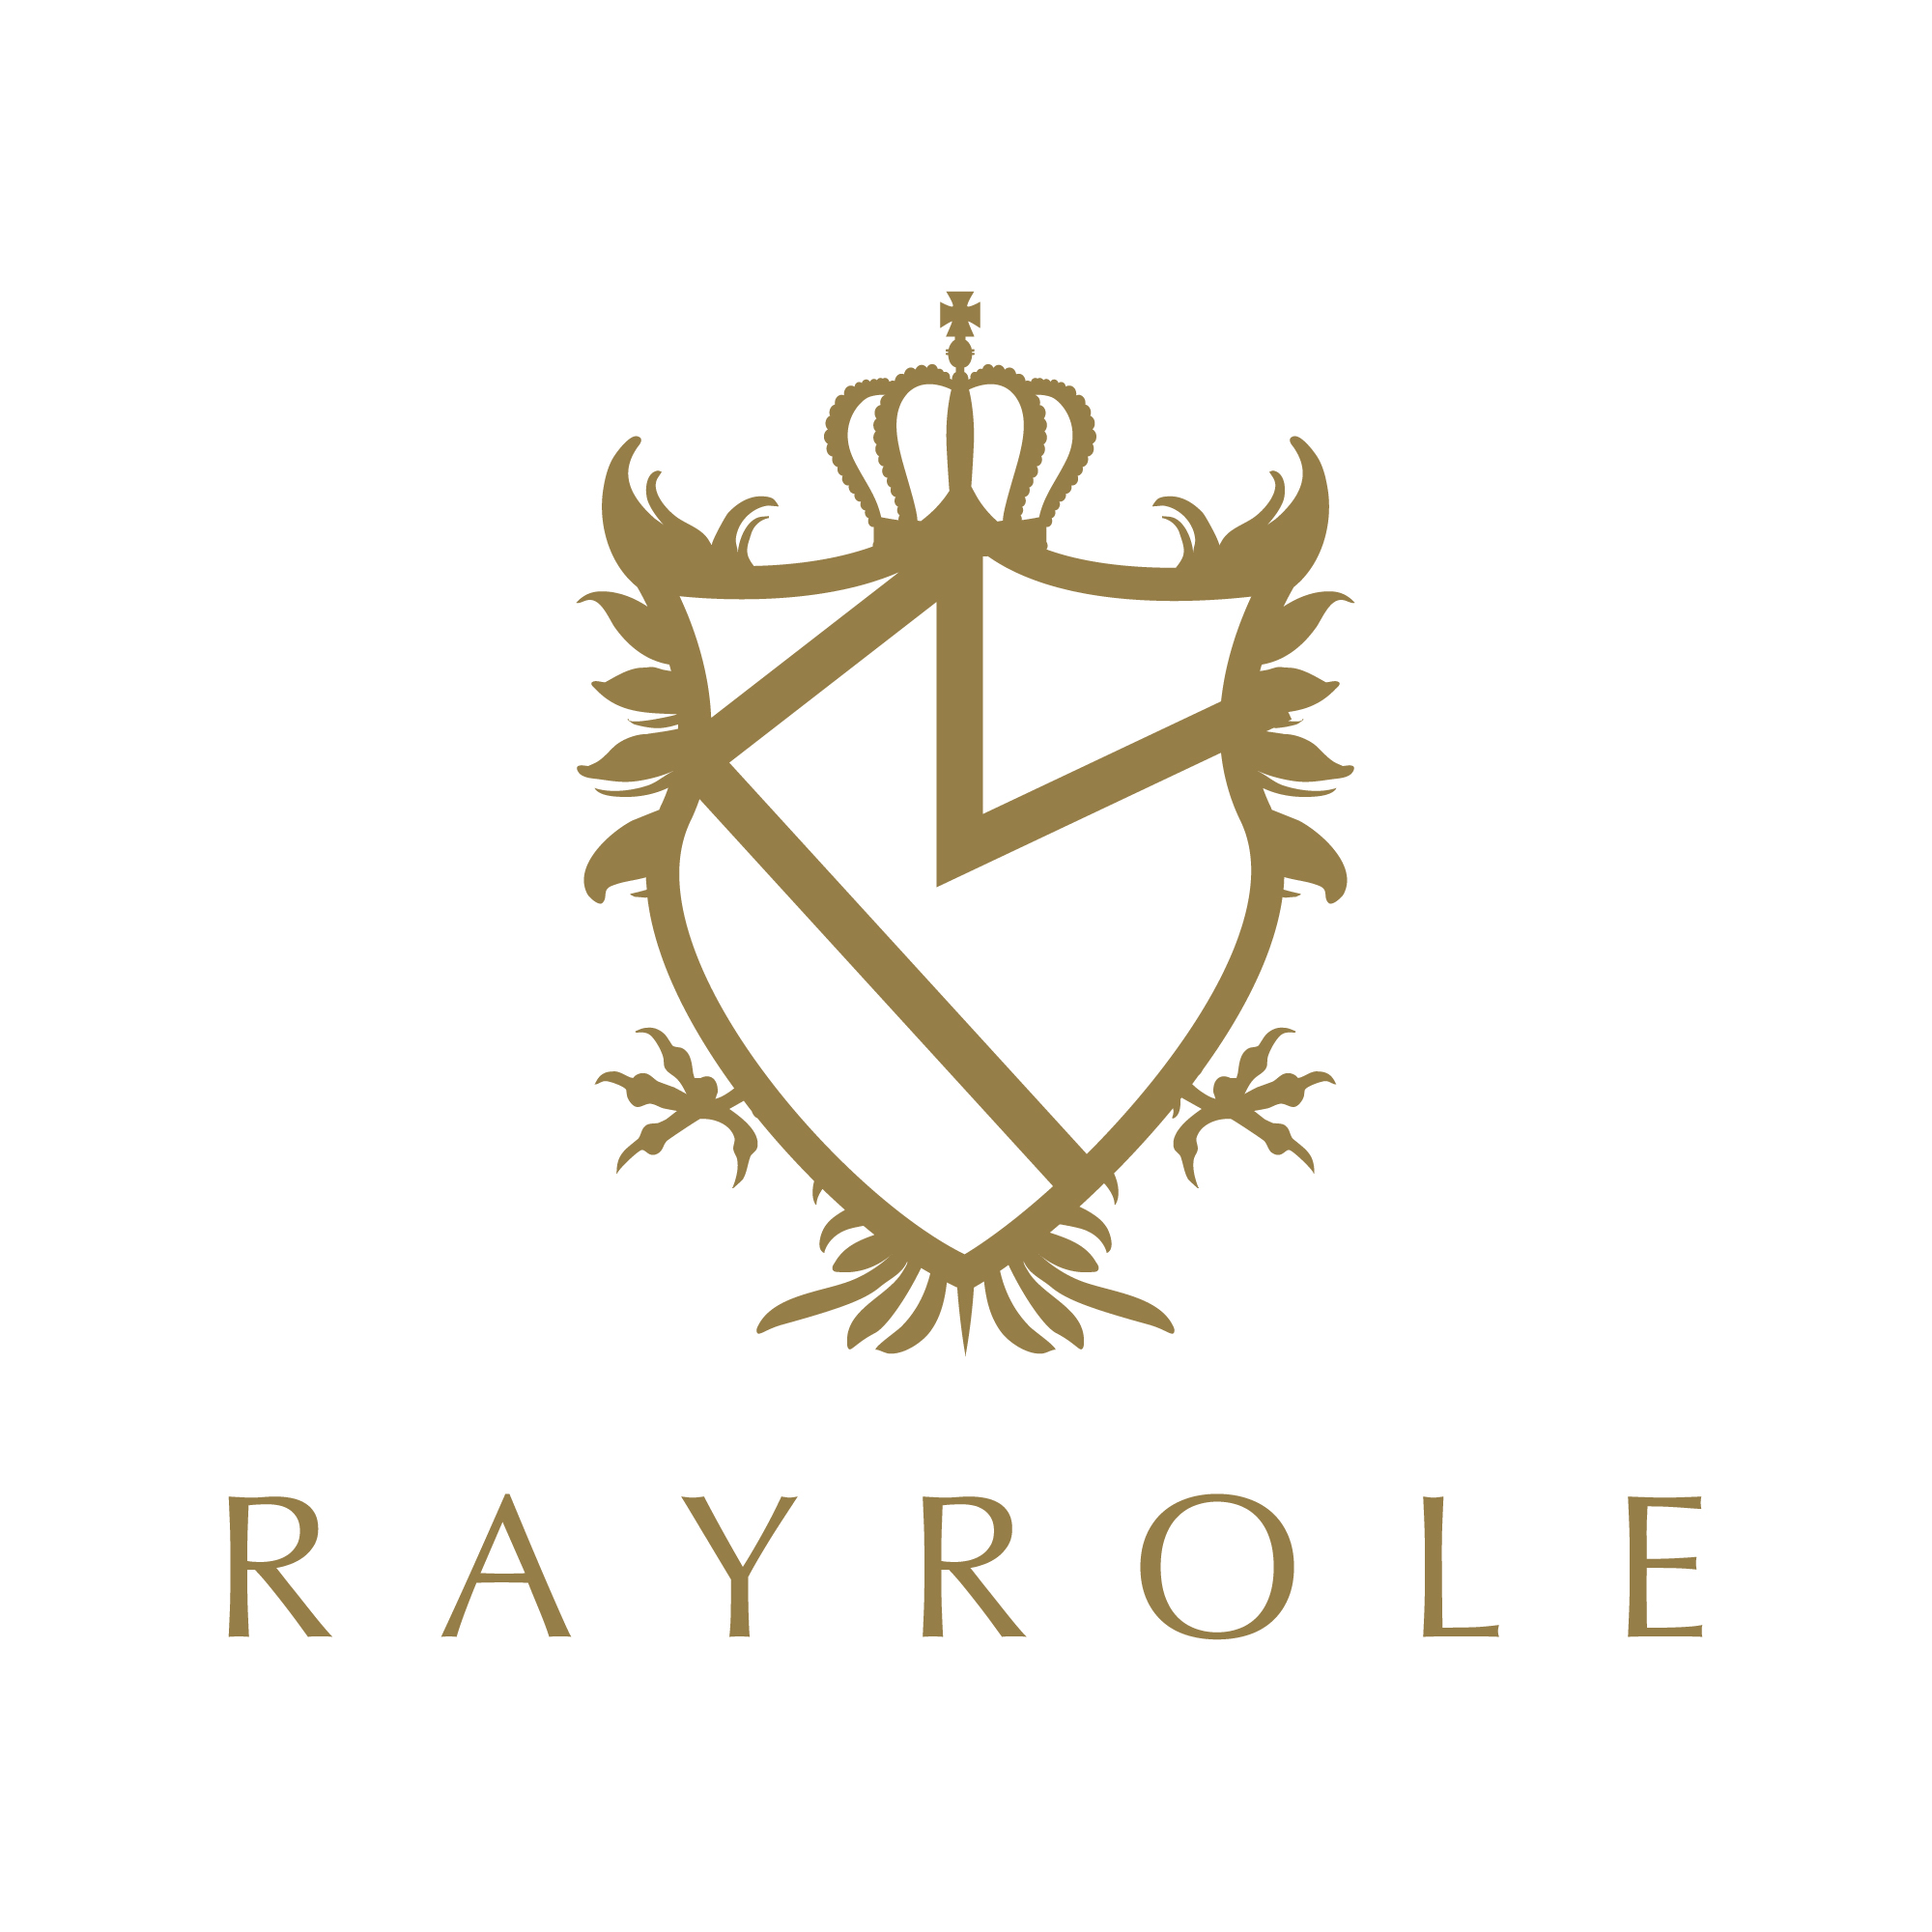 RAYROLE_logo_type_gld.jpg